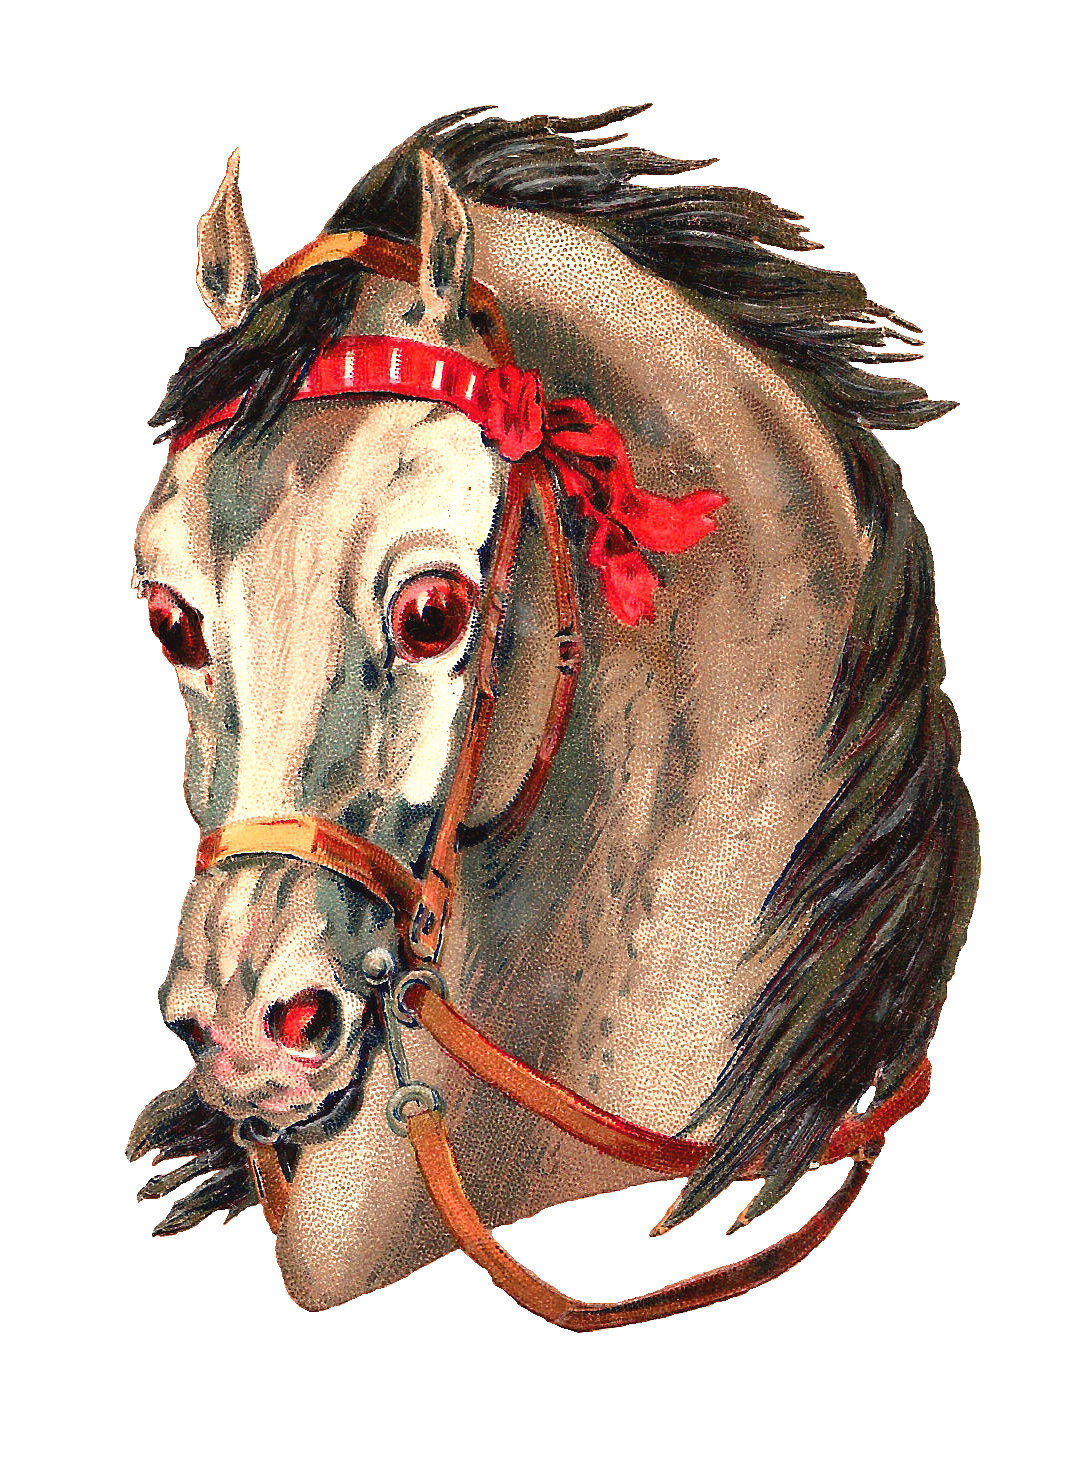 Antique Image: Free Horse Clip Art: 2 Horse Portraits with Reins